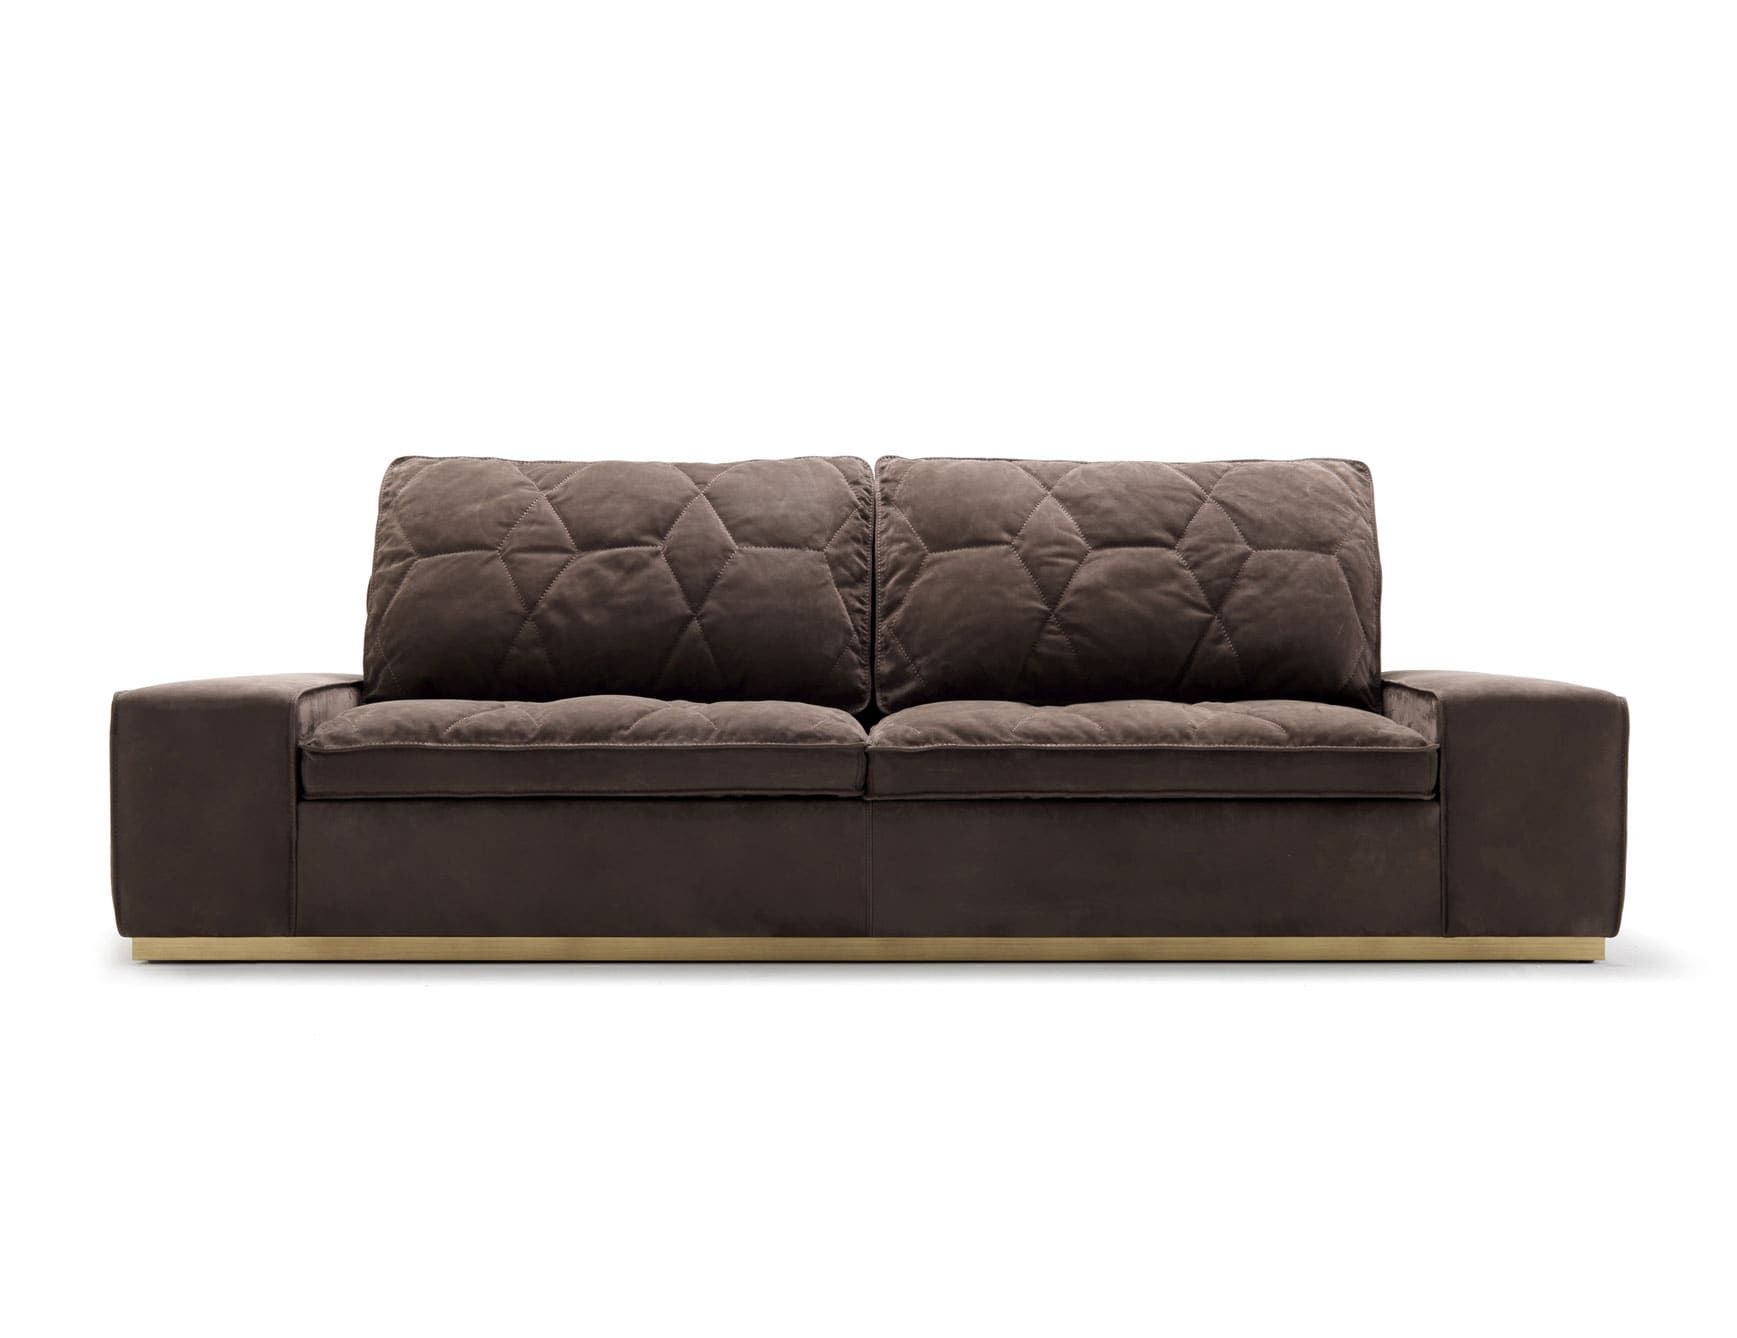 Cesar modern Italian sofa chair with brown leather